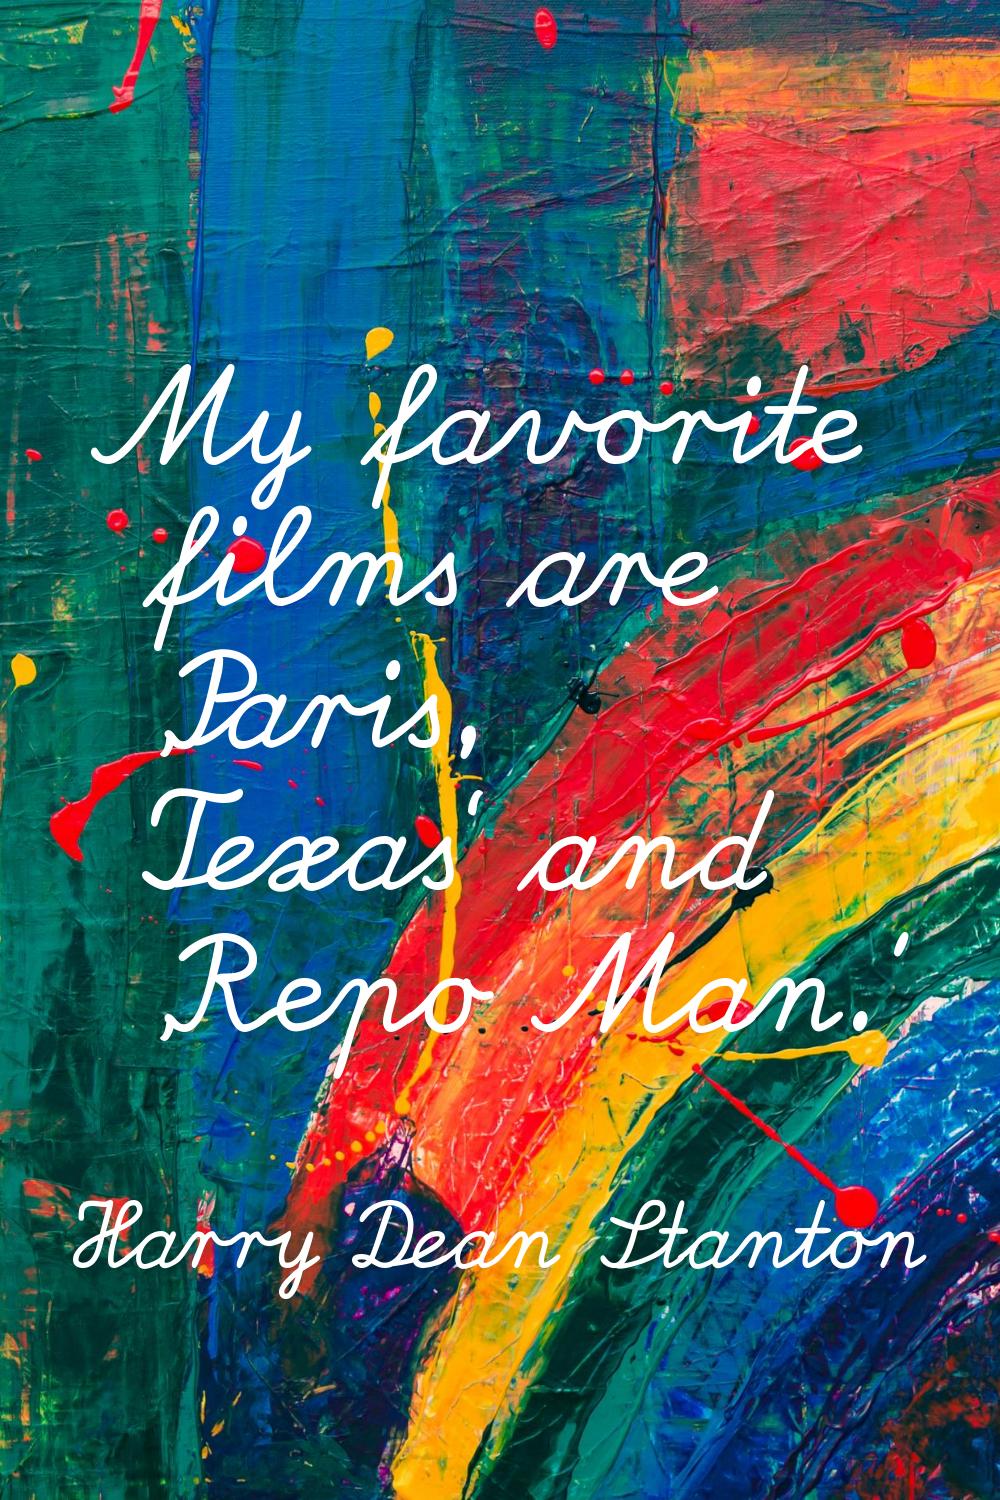 My favorite films are 'Paris, Texas' and 'Repo Man.'